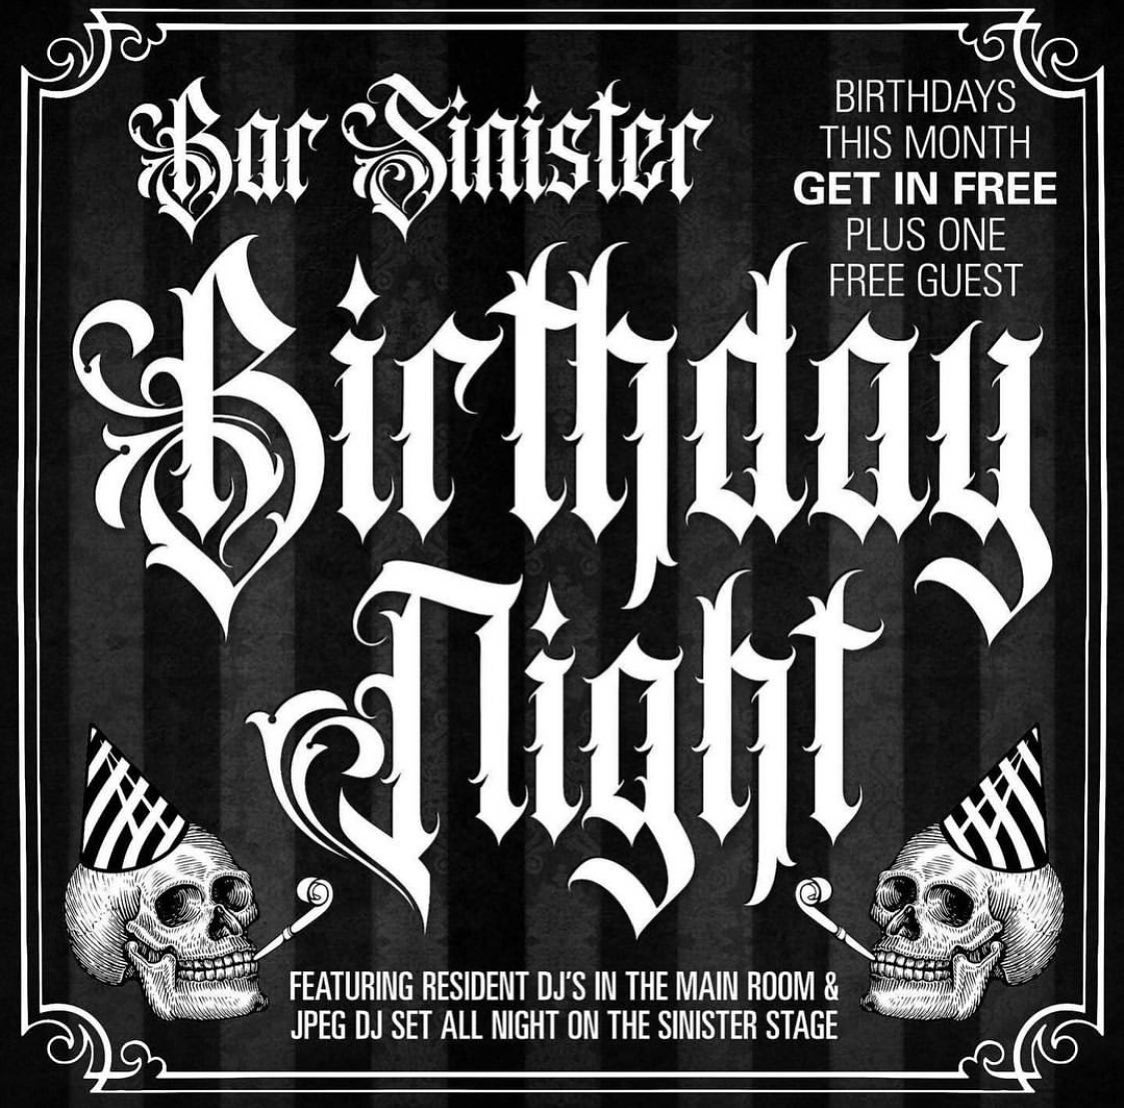 TONIGHT SAT MAY 4th at Bar Sinister! MAY BIRTHDAY BASH! All May Birthdays are FREE +1 FREE Guest!